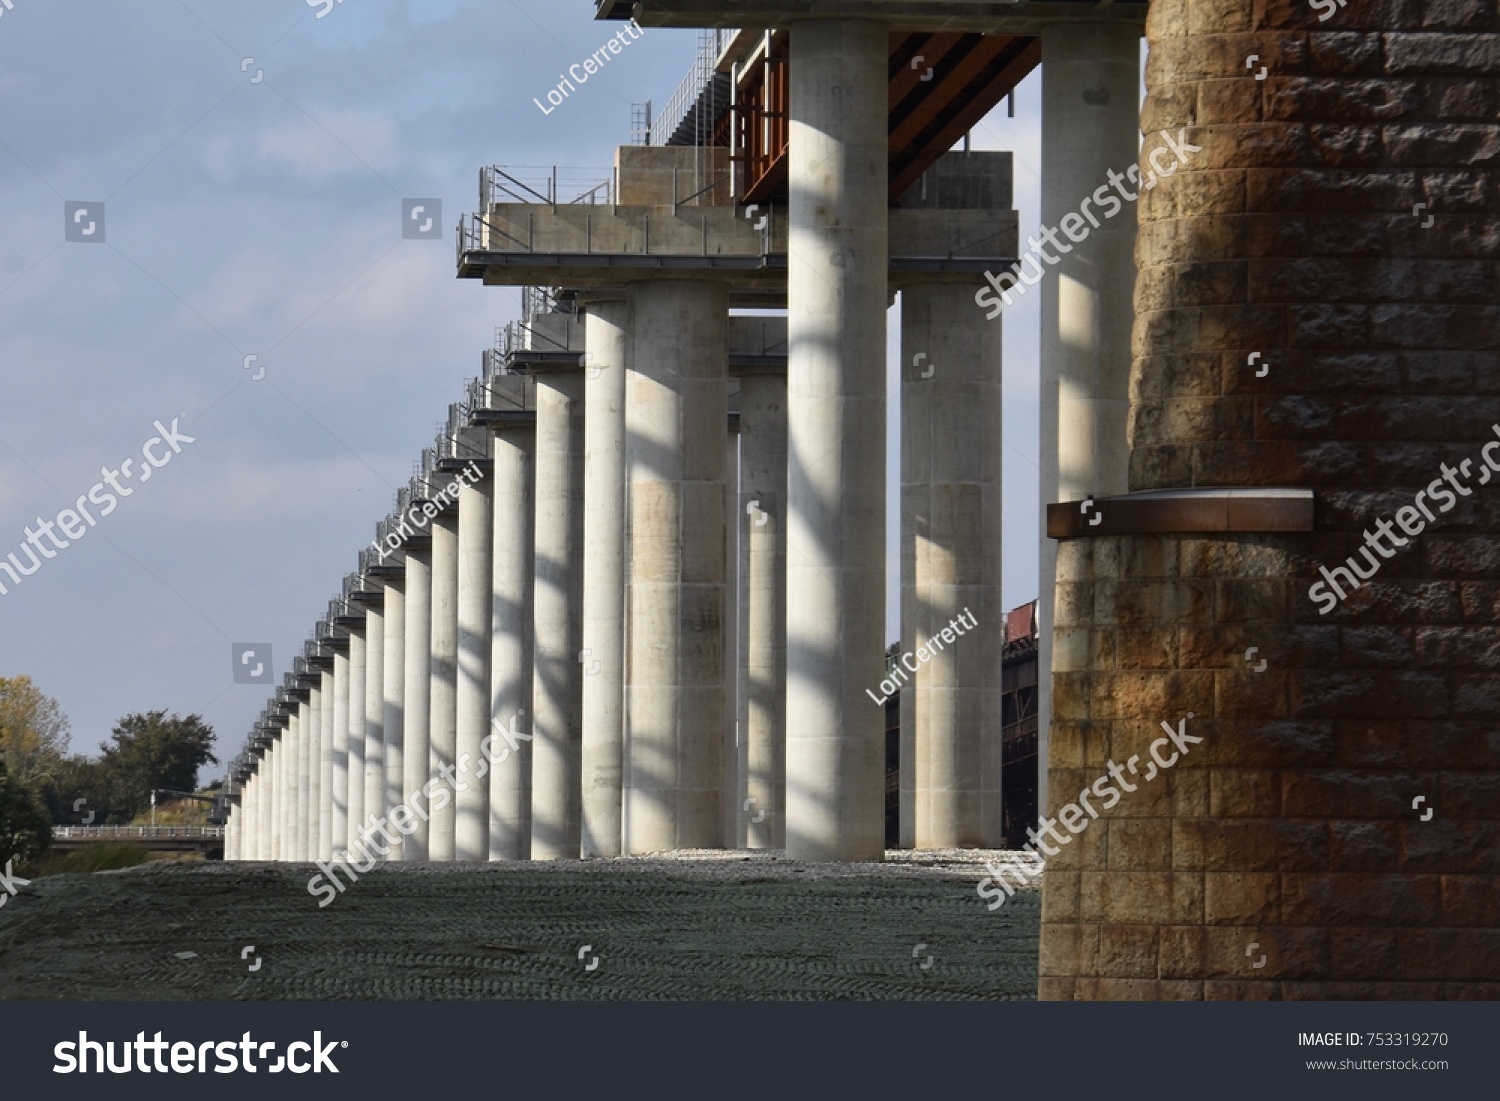 Repetitive pillars below bridge into the distance #753319270